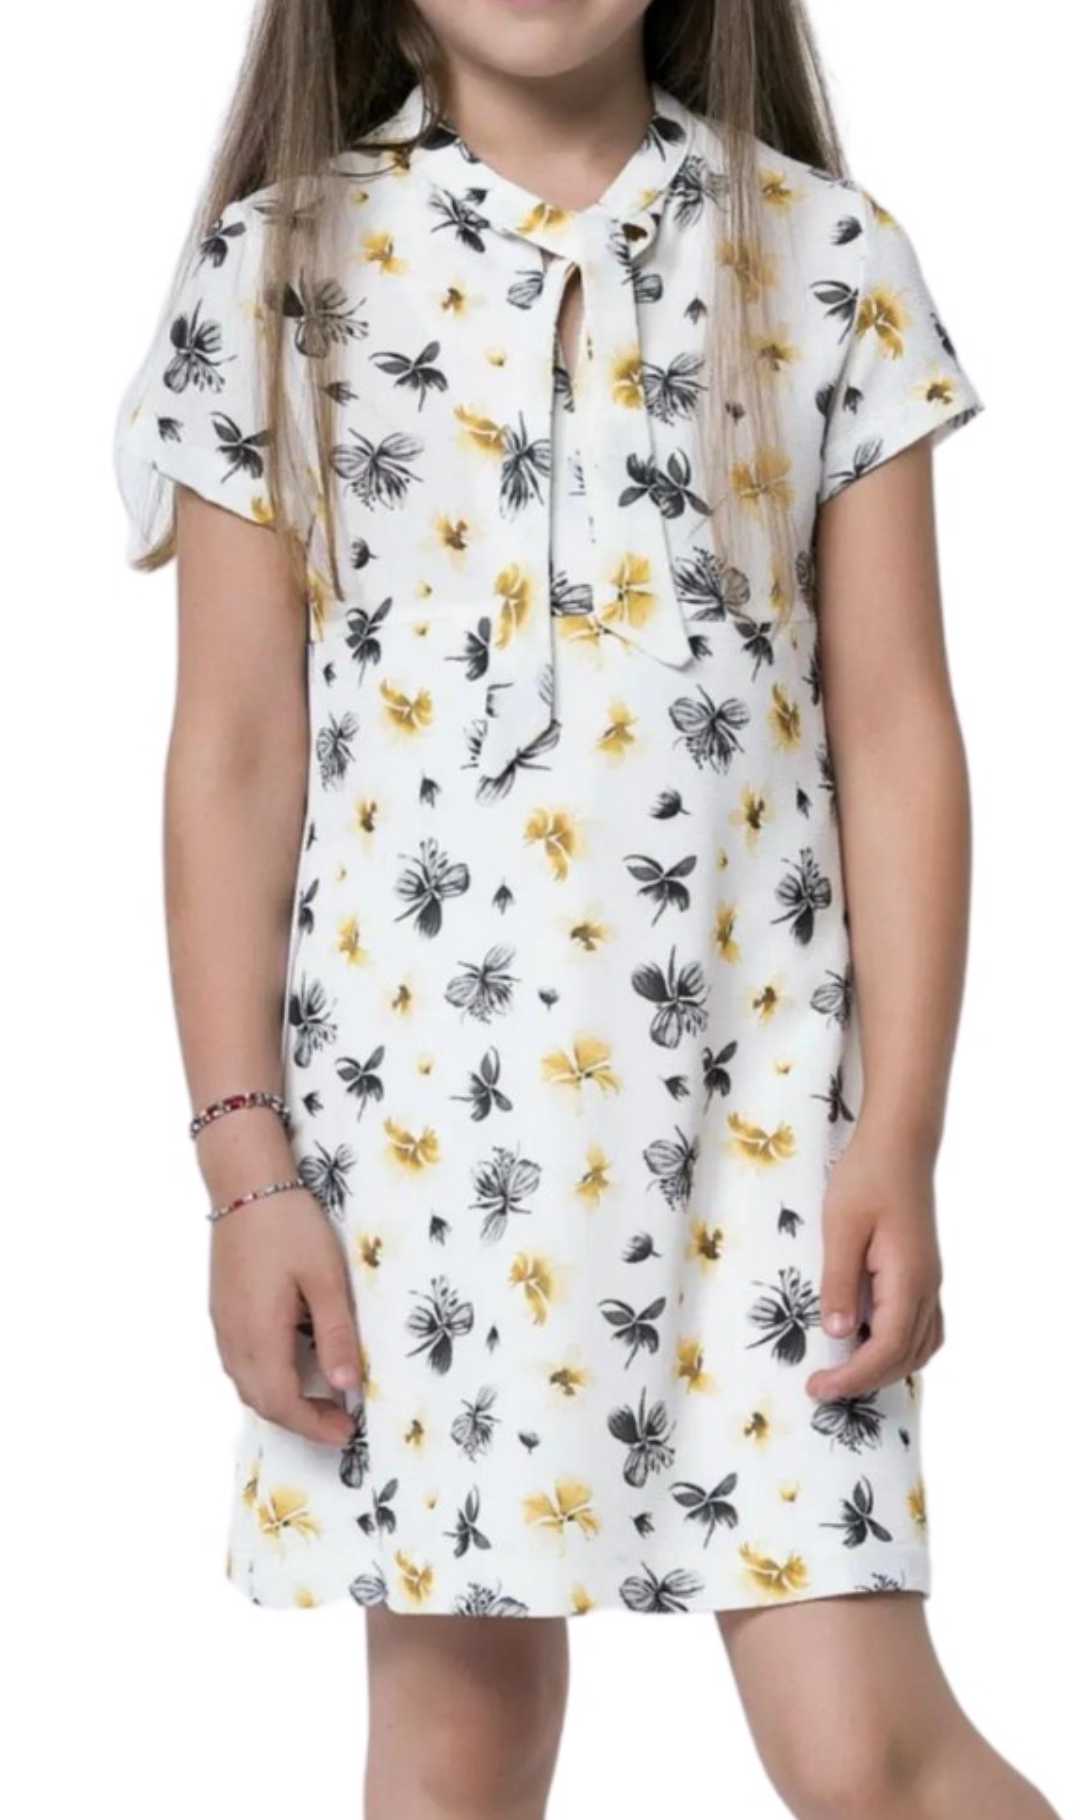 Pin on Girls dresses/patterns